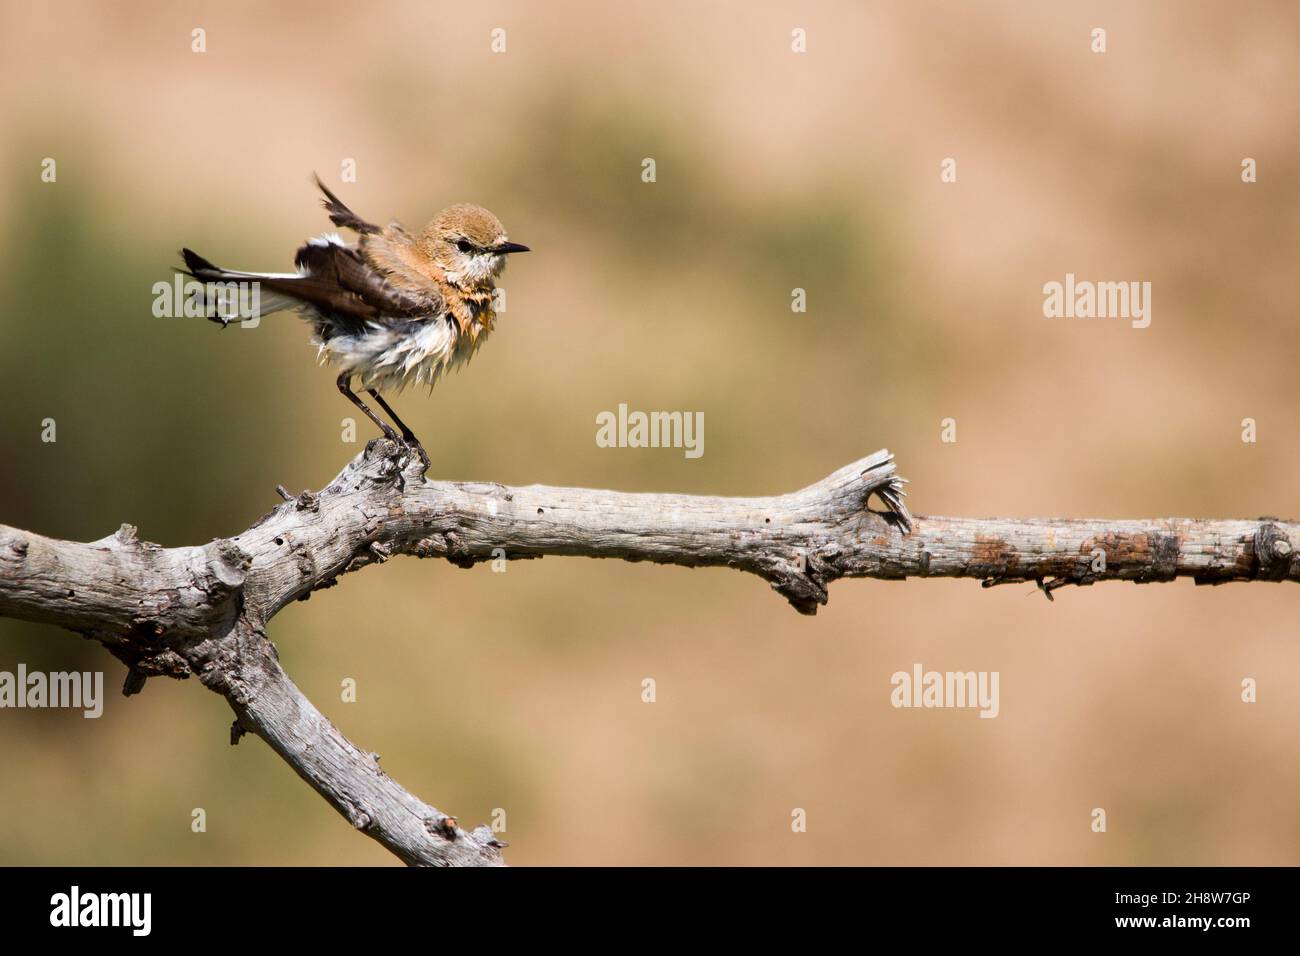 Oenanthe hispanica - la collalba rubia, es una especie de ave paseriforme de la familia Muscicapidae. Foto Stock